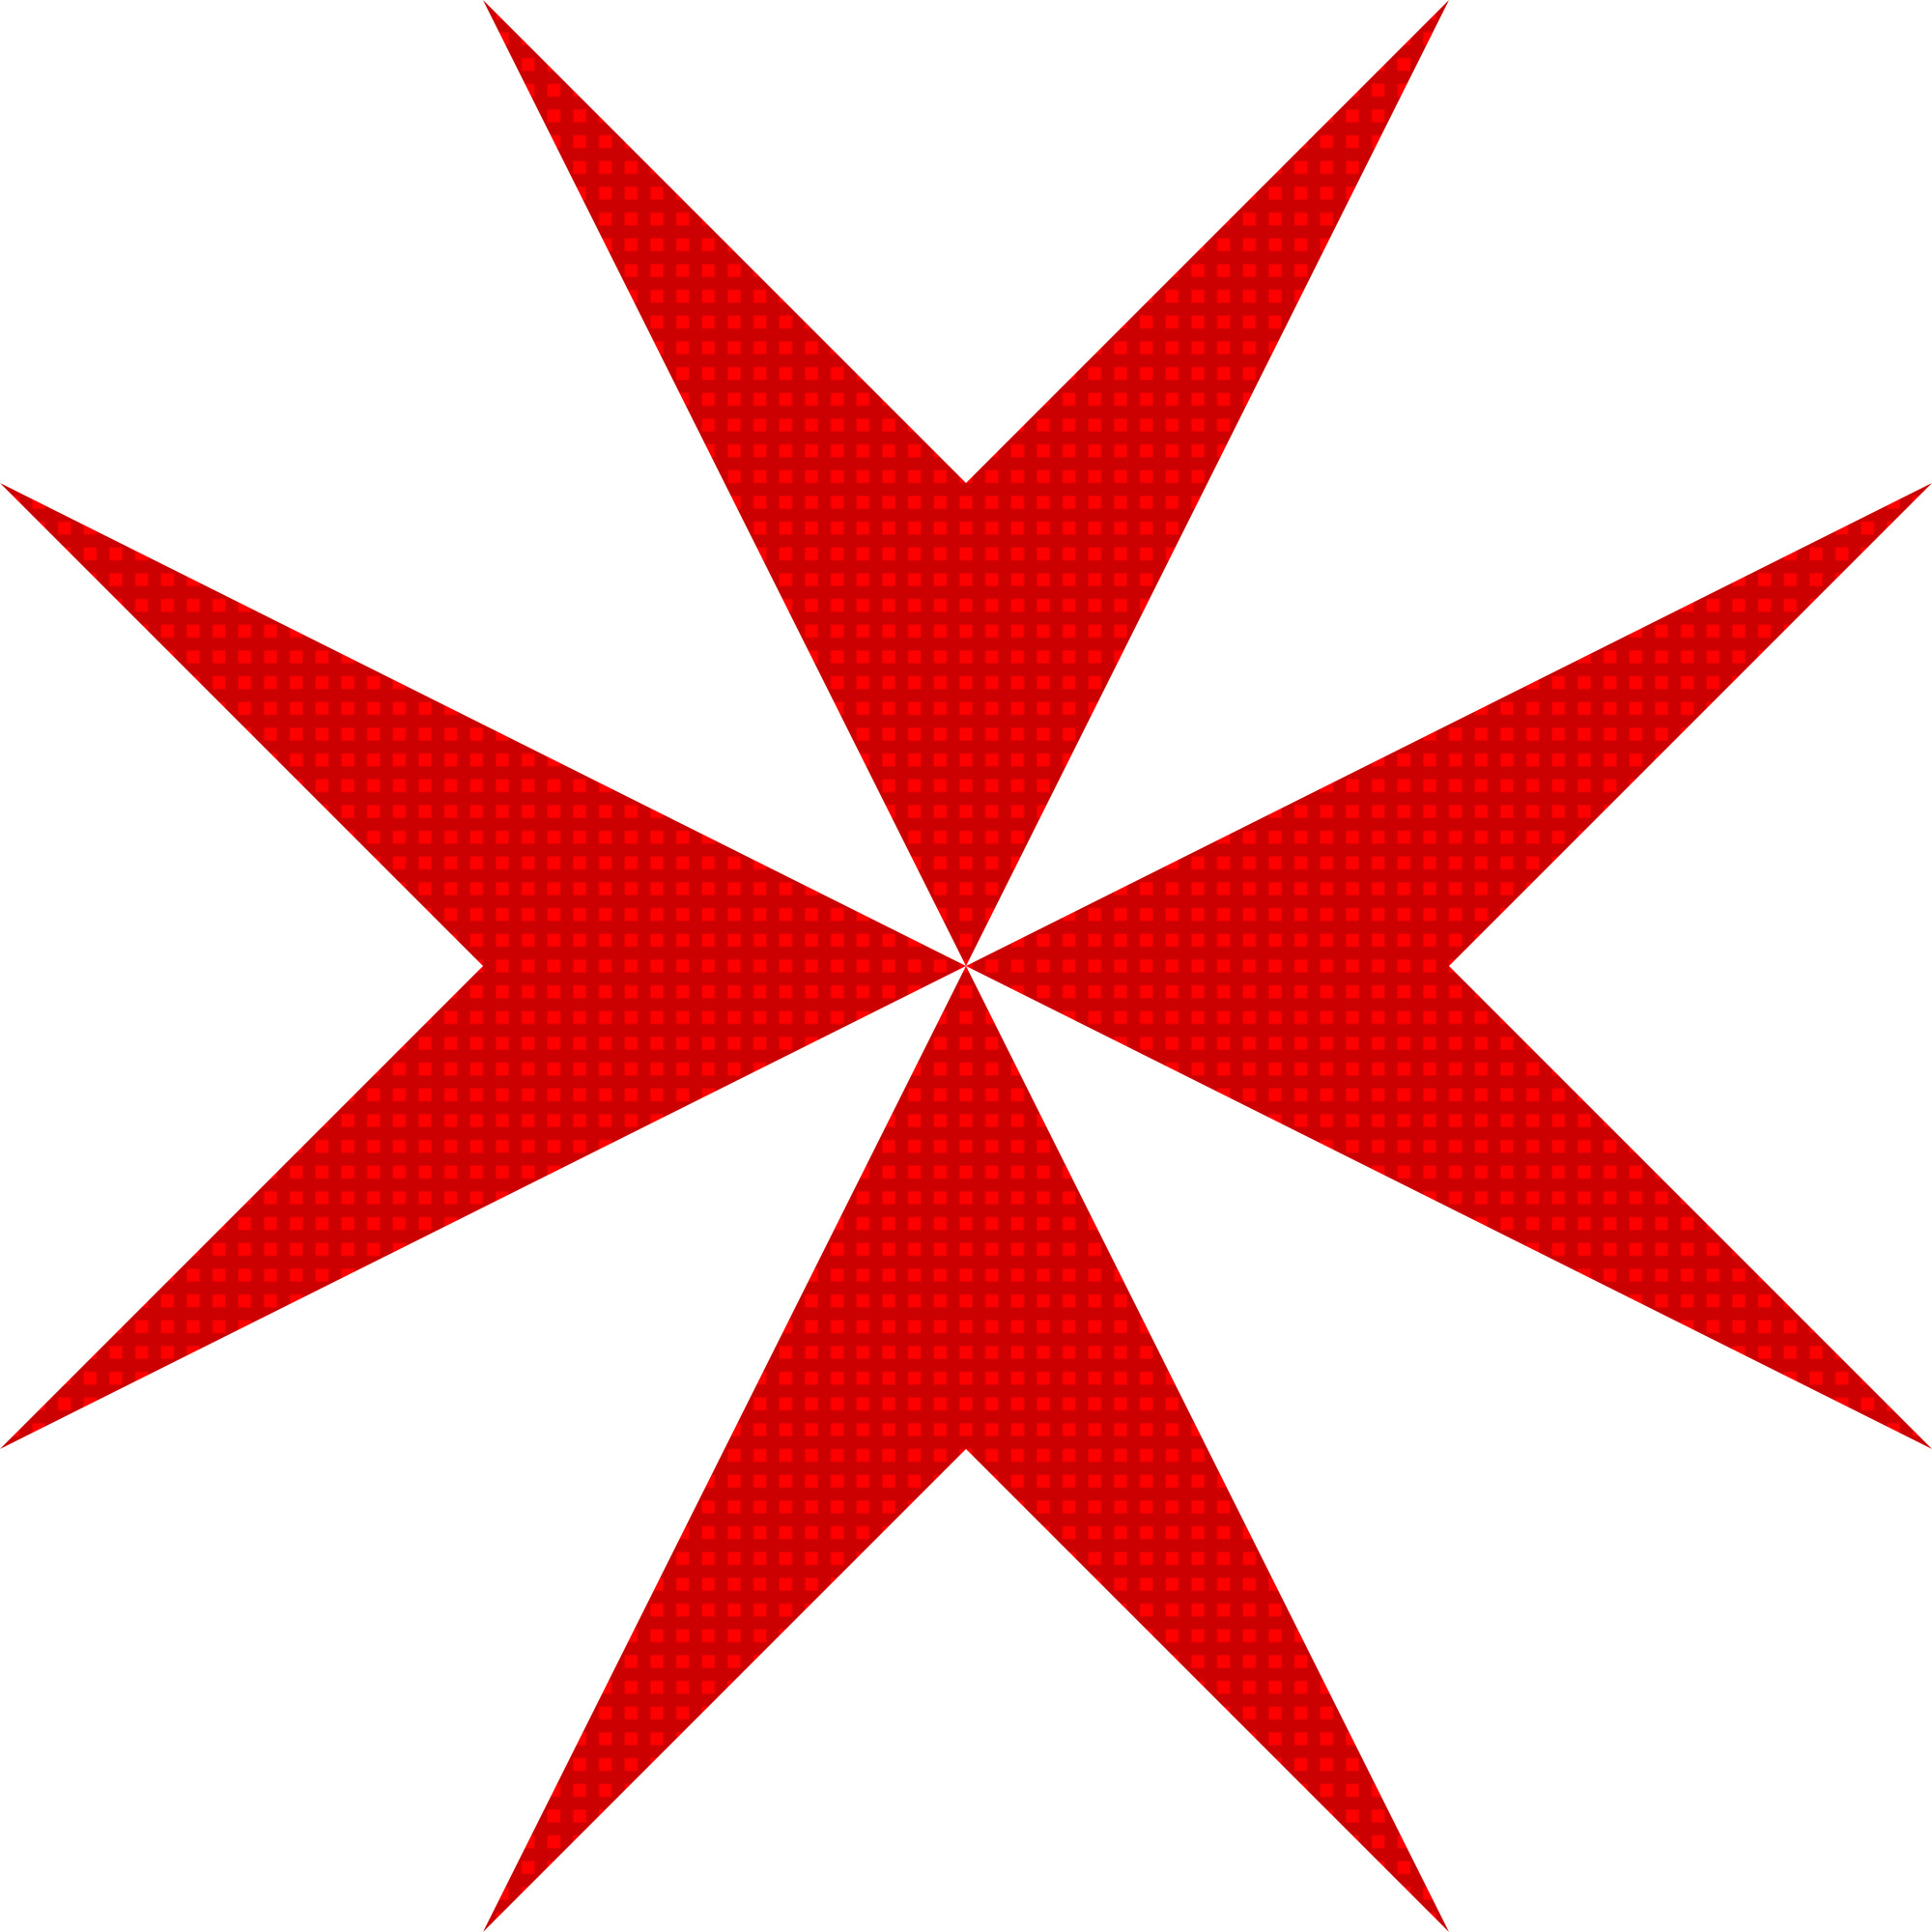 2000x2000 File:Cross of the Scottish Knights Templar.svg - Wikimedia Commons